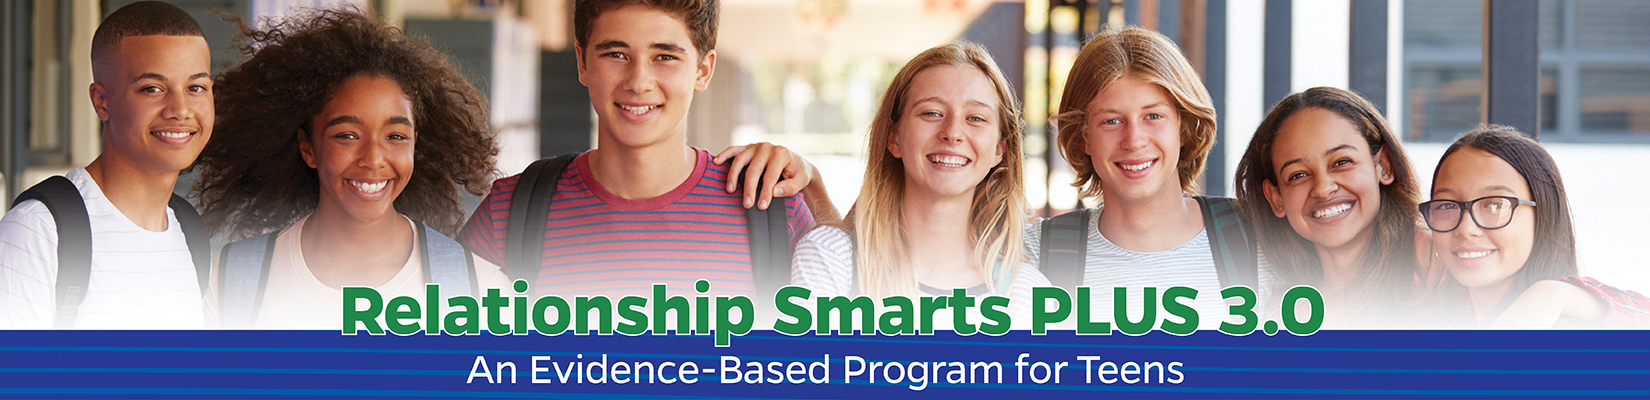 Relations Smarts Plus 3.0: Evidence Based Program For Teens